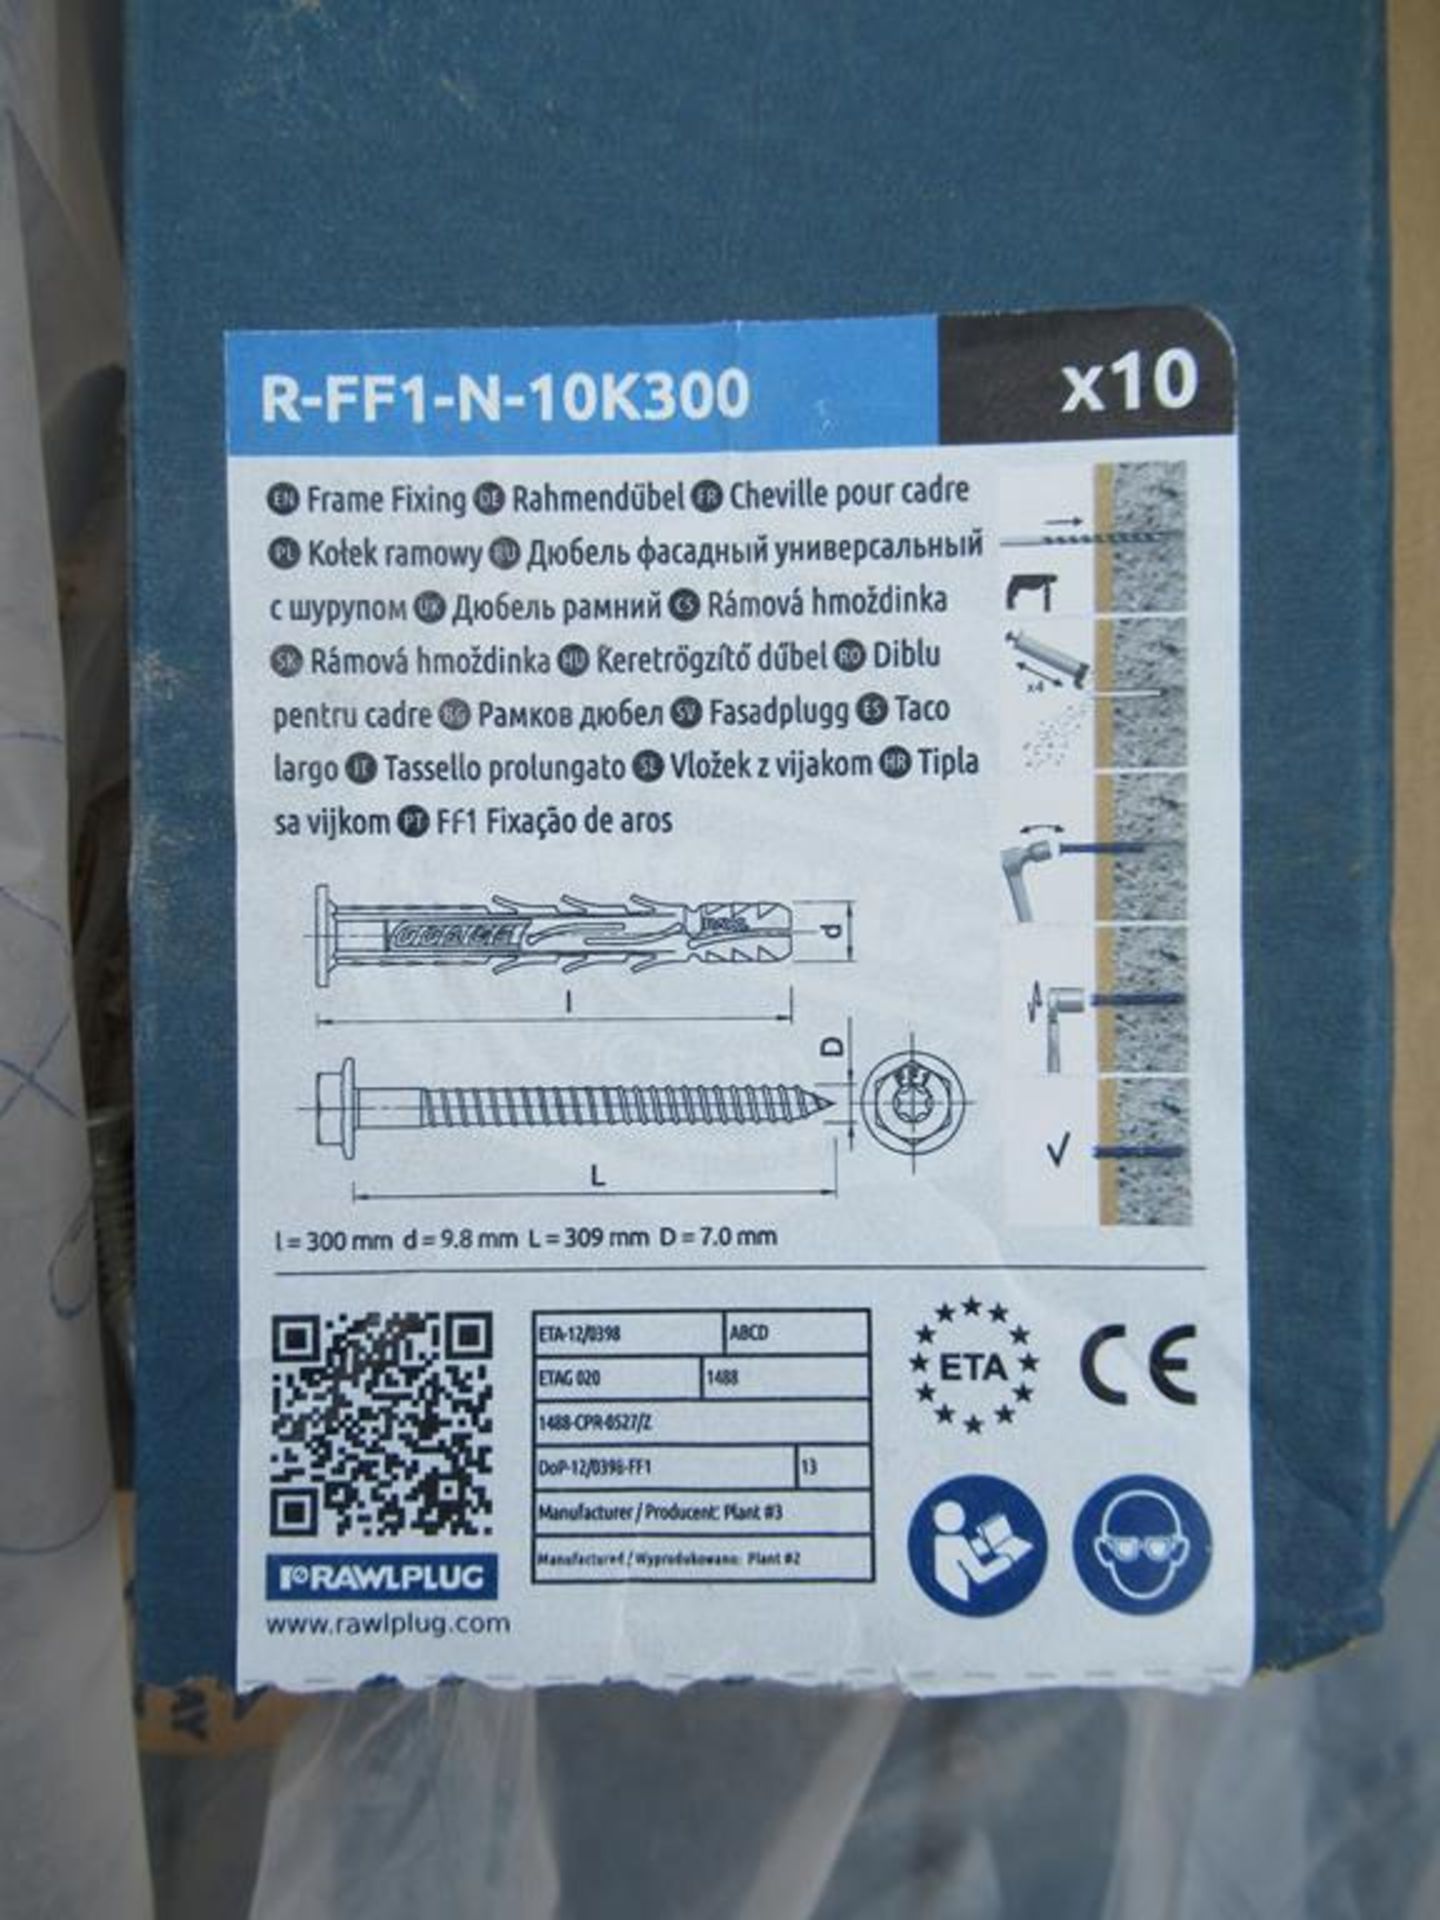 24 x 10 Rawlplug R-FF-N-10K300 Frame Fixings - Image 2 of 2